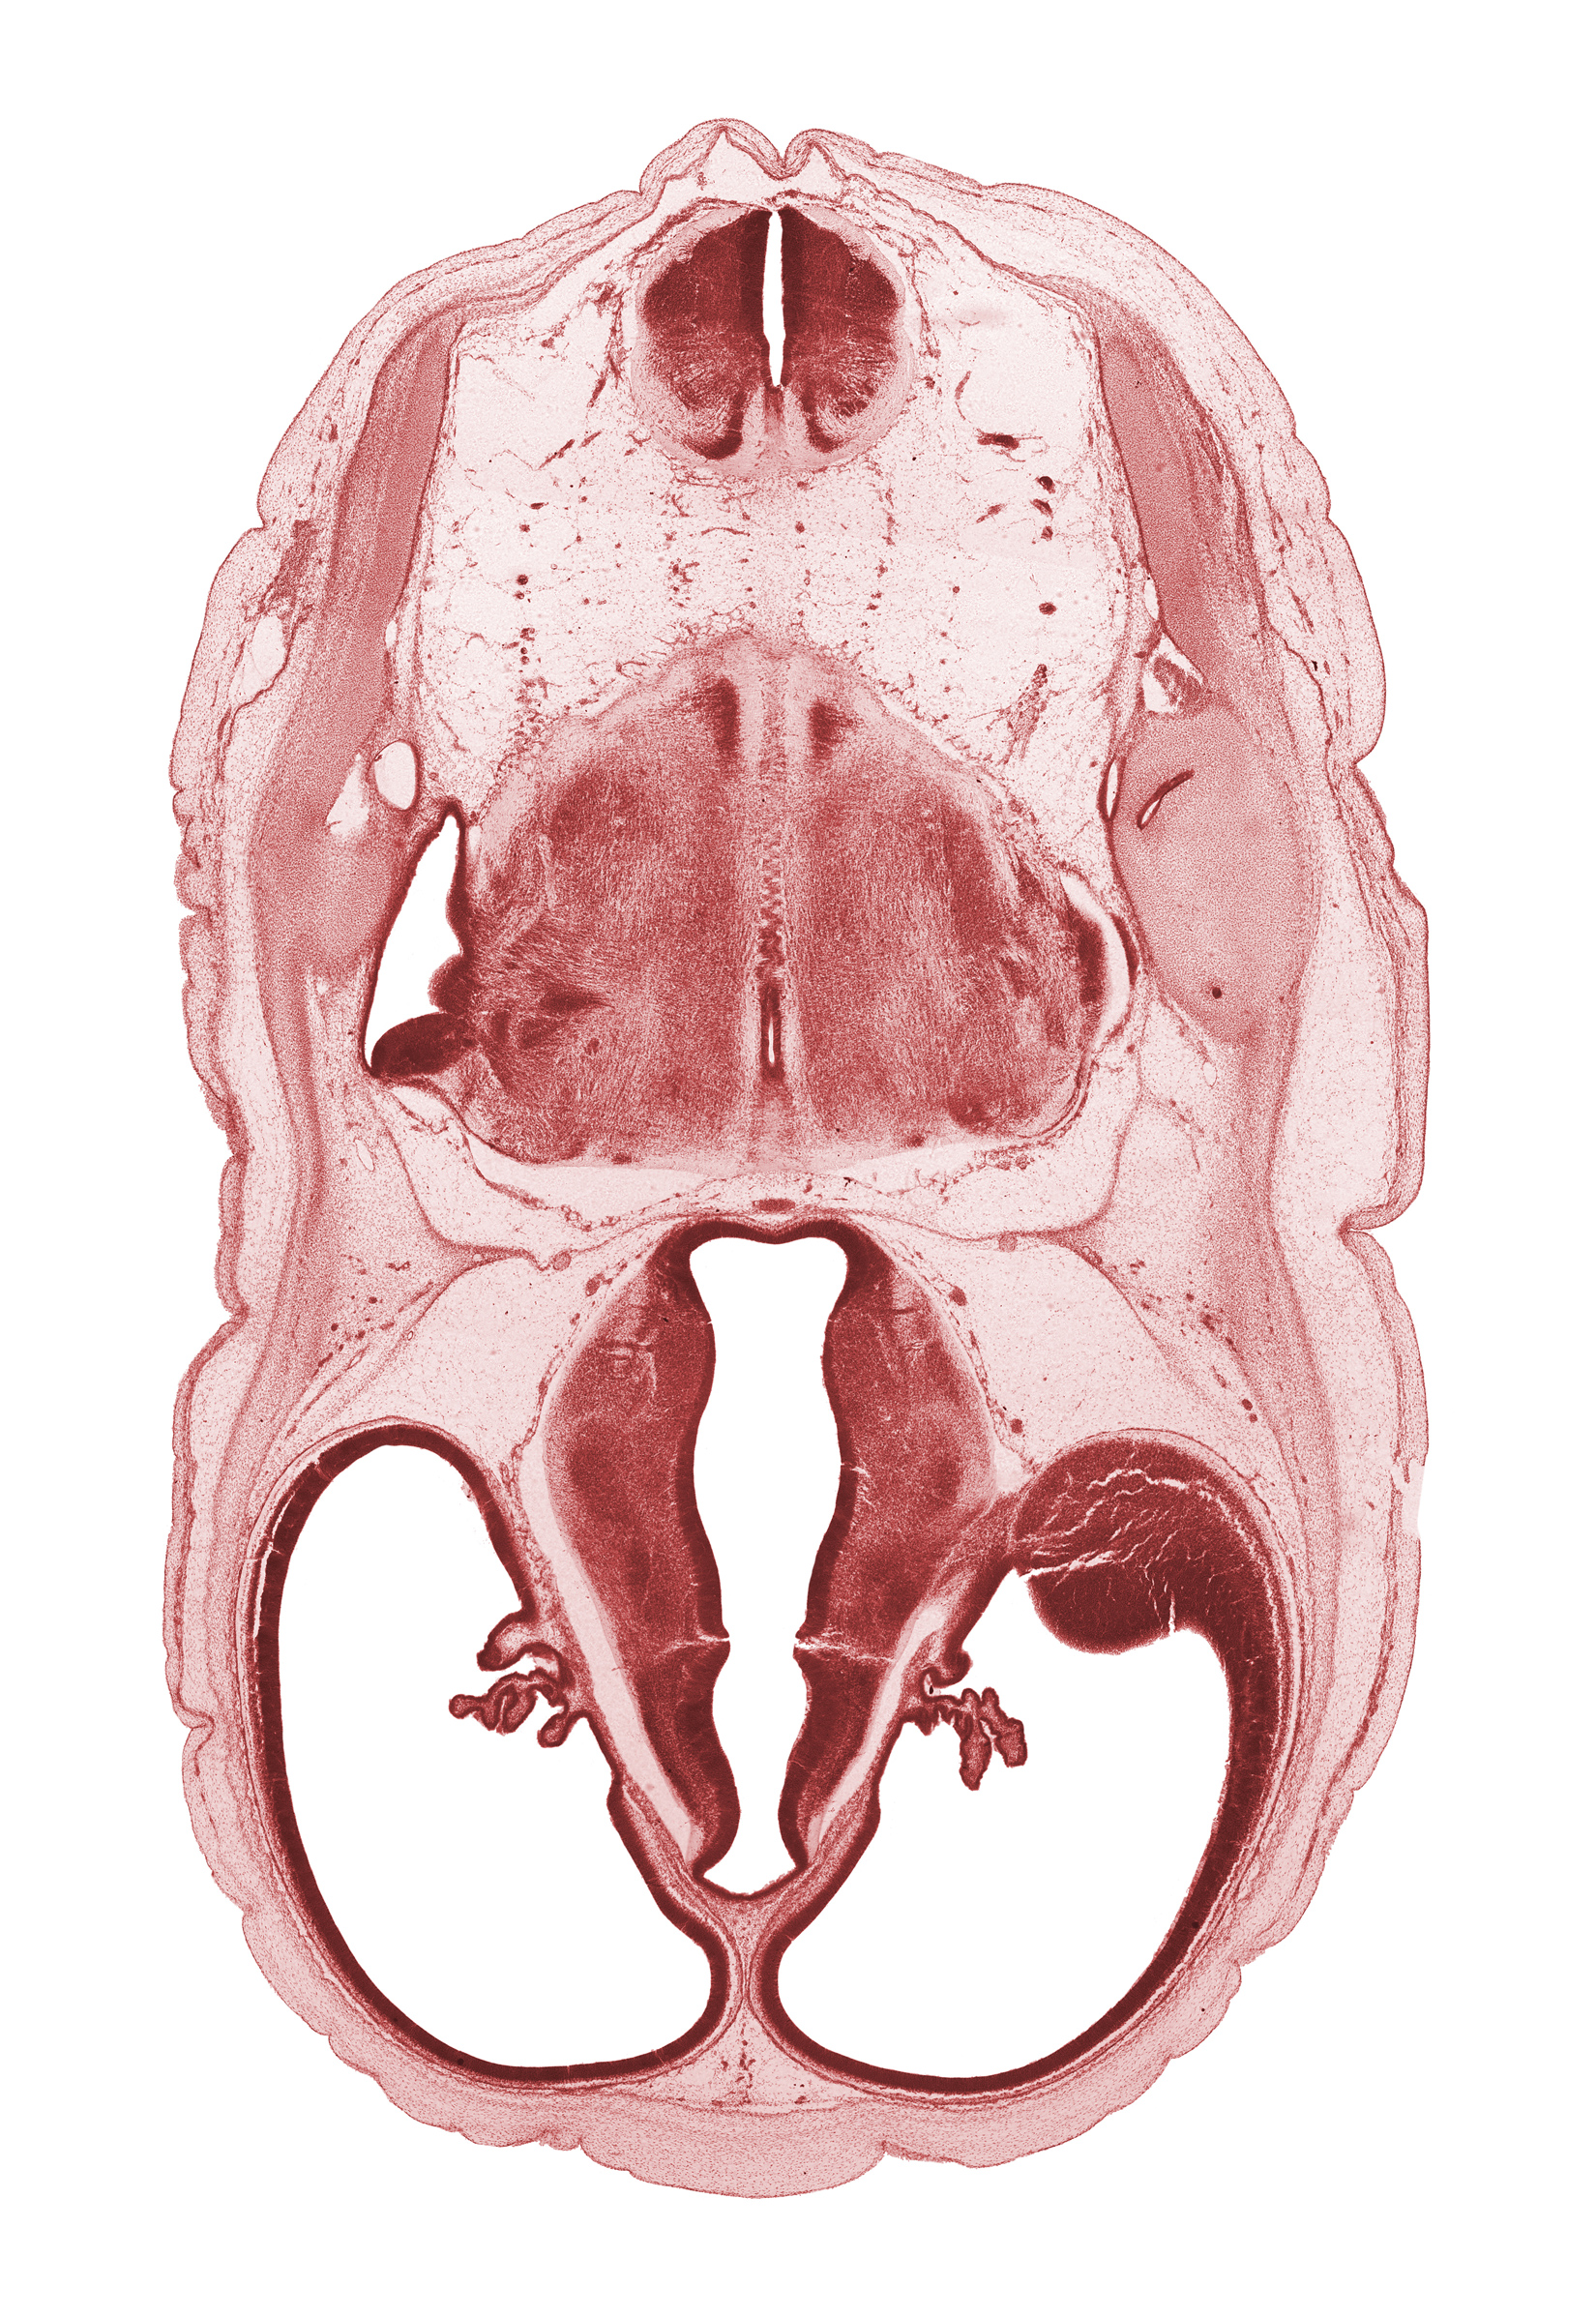 cerebral vesicle (hemisphere), decussation, dorsal thalamus, dural band for tentorium cerebelli, endolymphatic duct, glossopharyngeal nerve (CN IX), hypothalamus, lateral ventricle, lateral ventricular eminence (telencephalon), marginal ridge, median sulcus, myelencephalon, posterior semicircular duct, root of hypoglossal nerve (CN XII), subarachnoid space, ventral thalamus